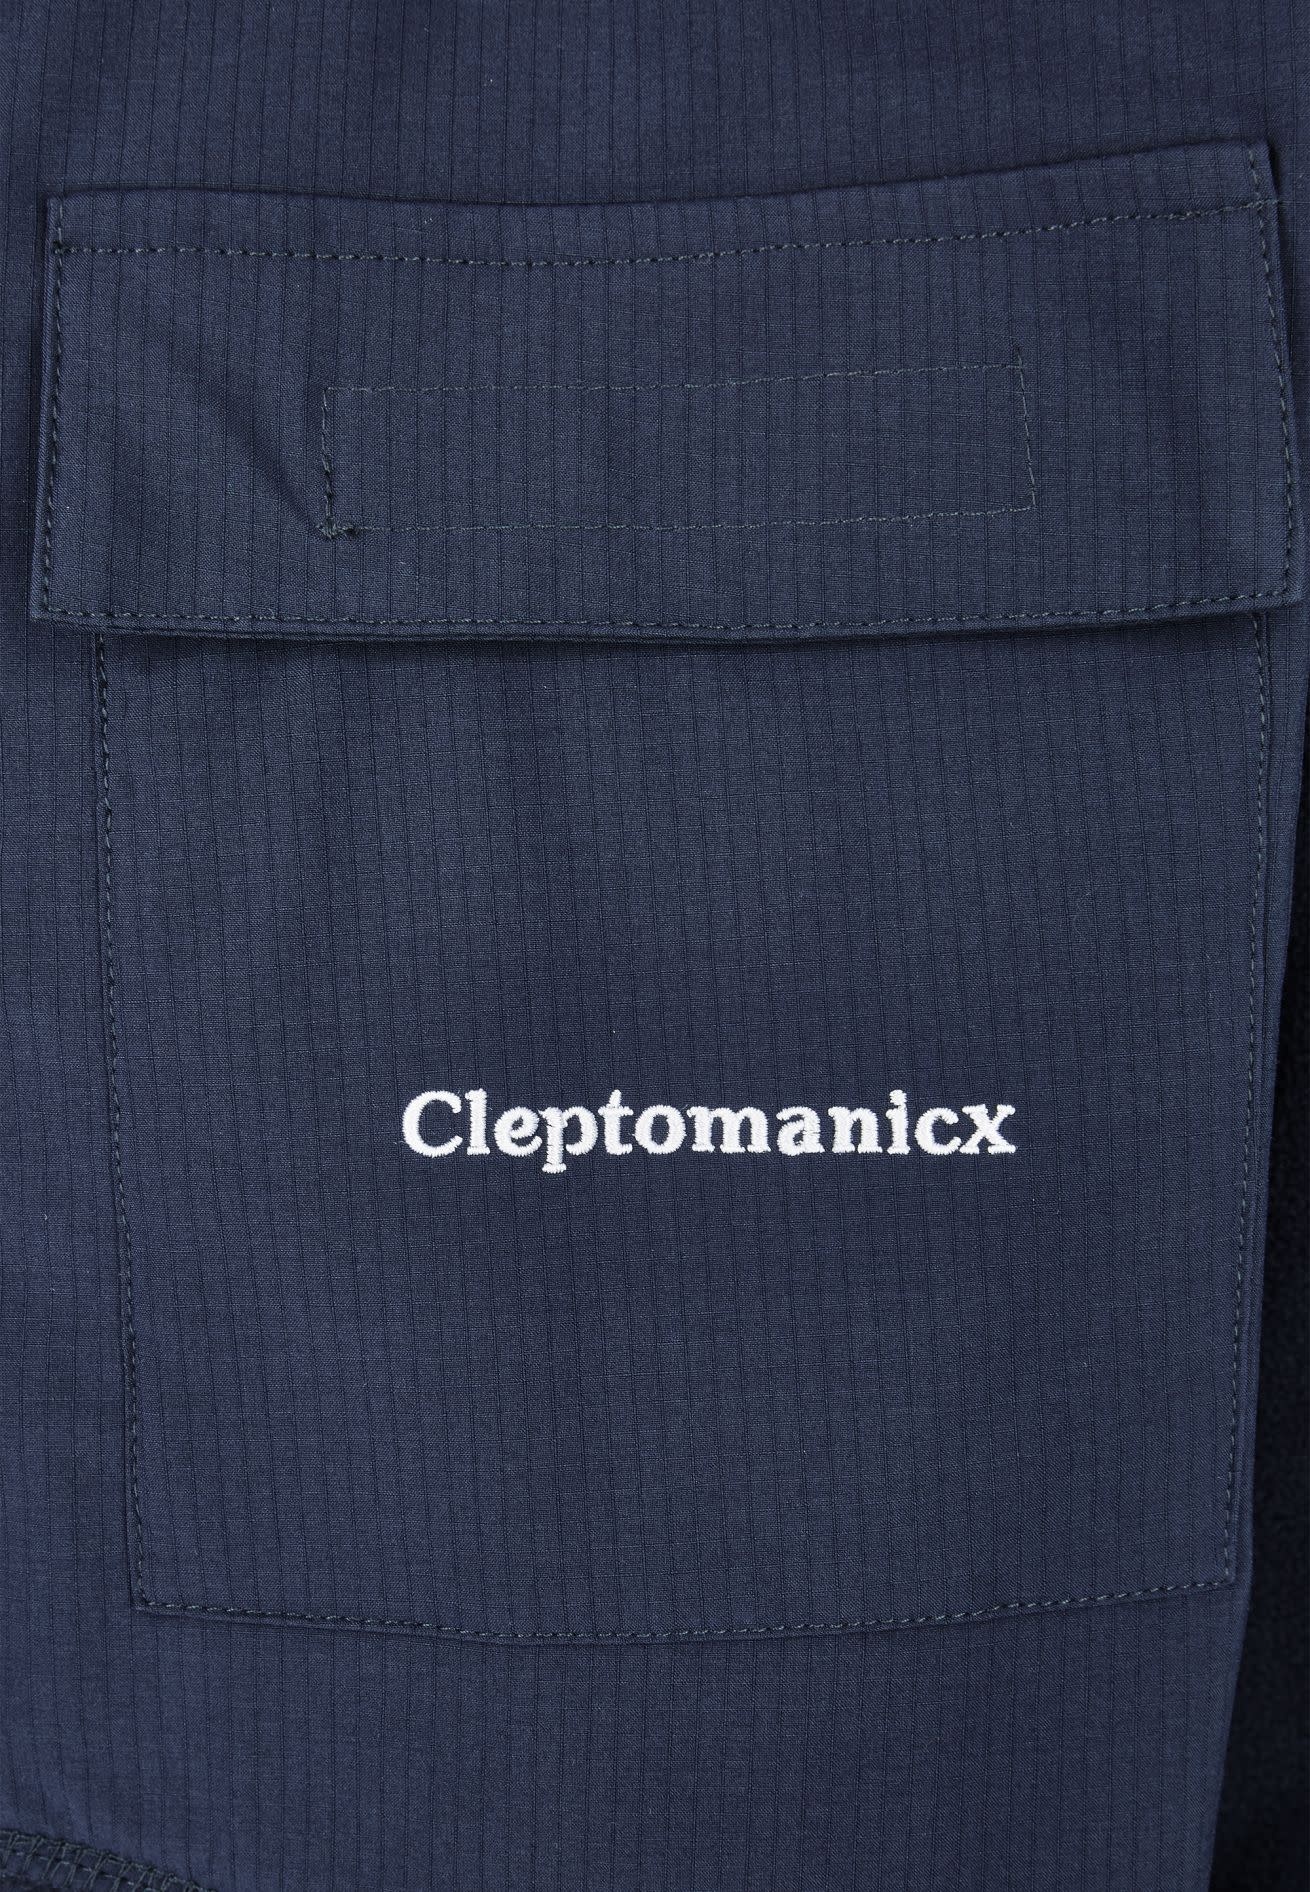 Cleptomanicx Cleptomanicx, Fisher Fleece Jacket, dark navy, XL